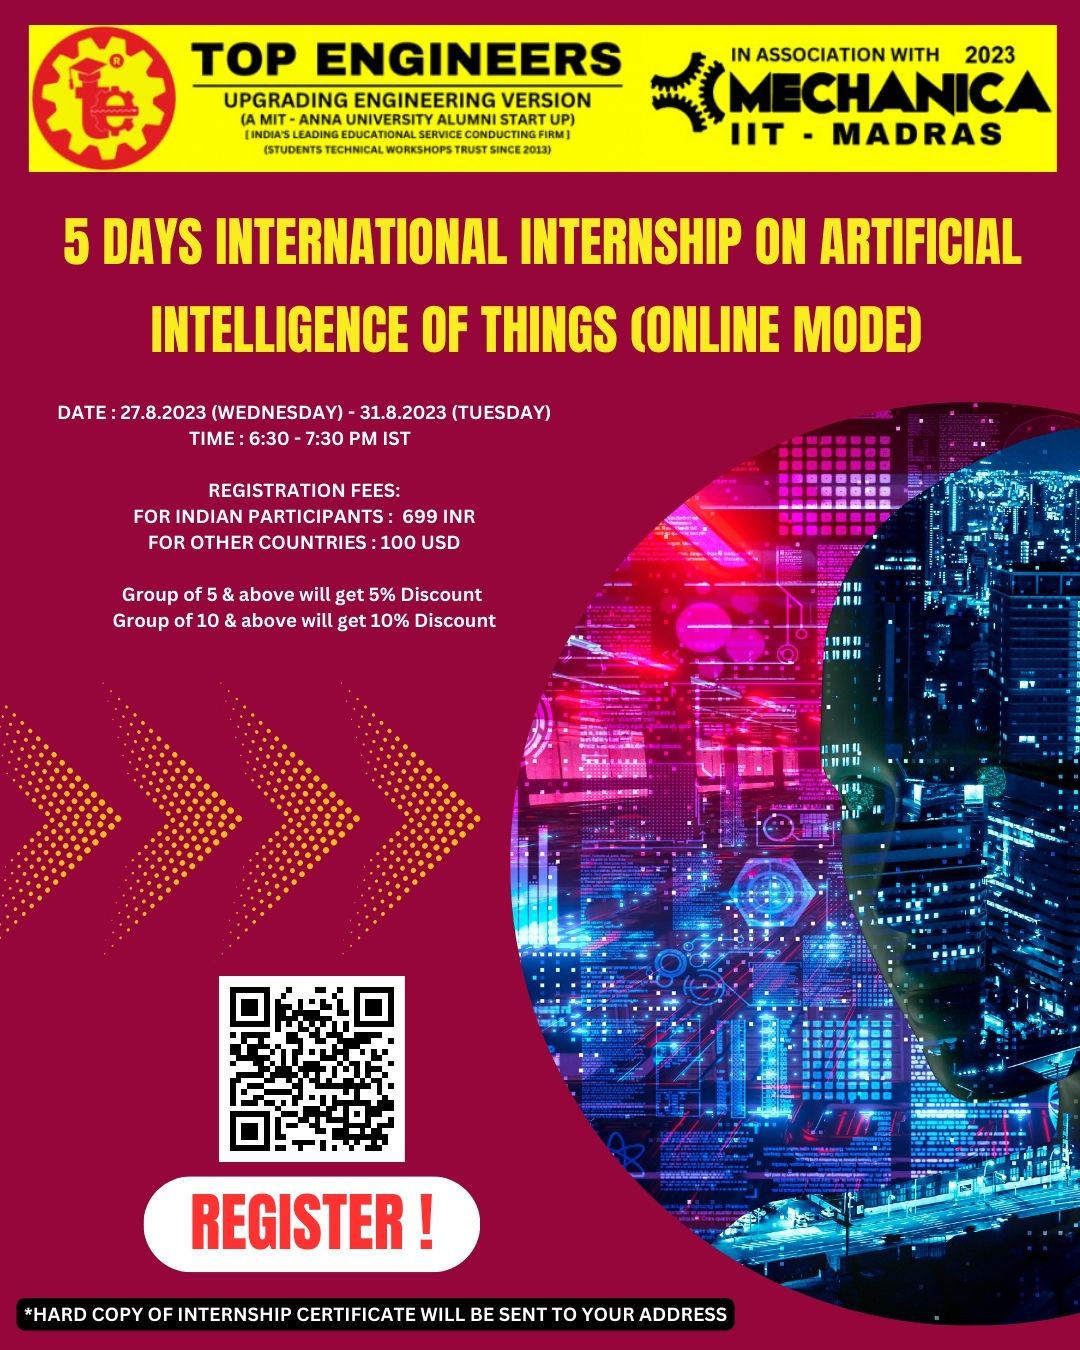 5 Days International Internship on Artificial Intelligence of Things 2023